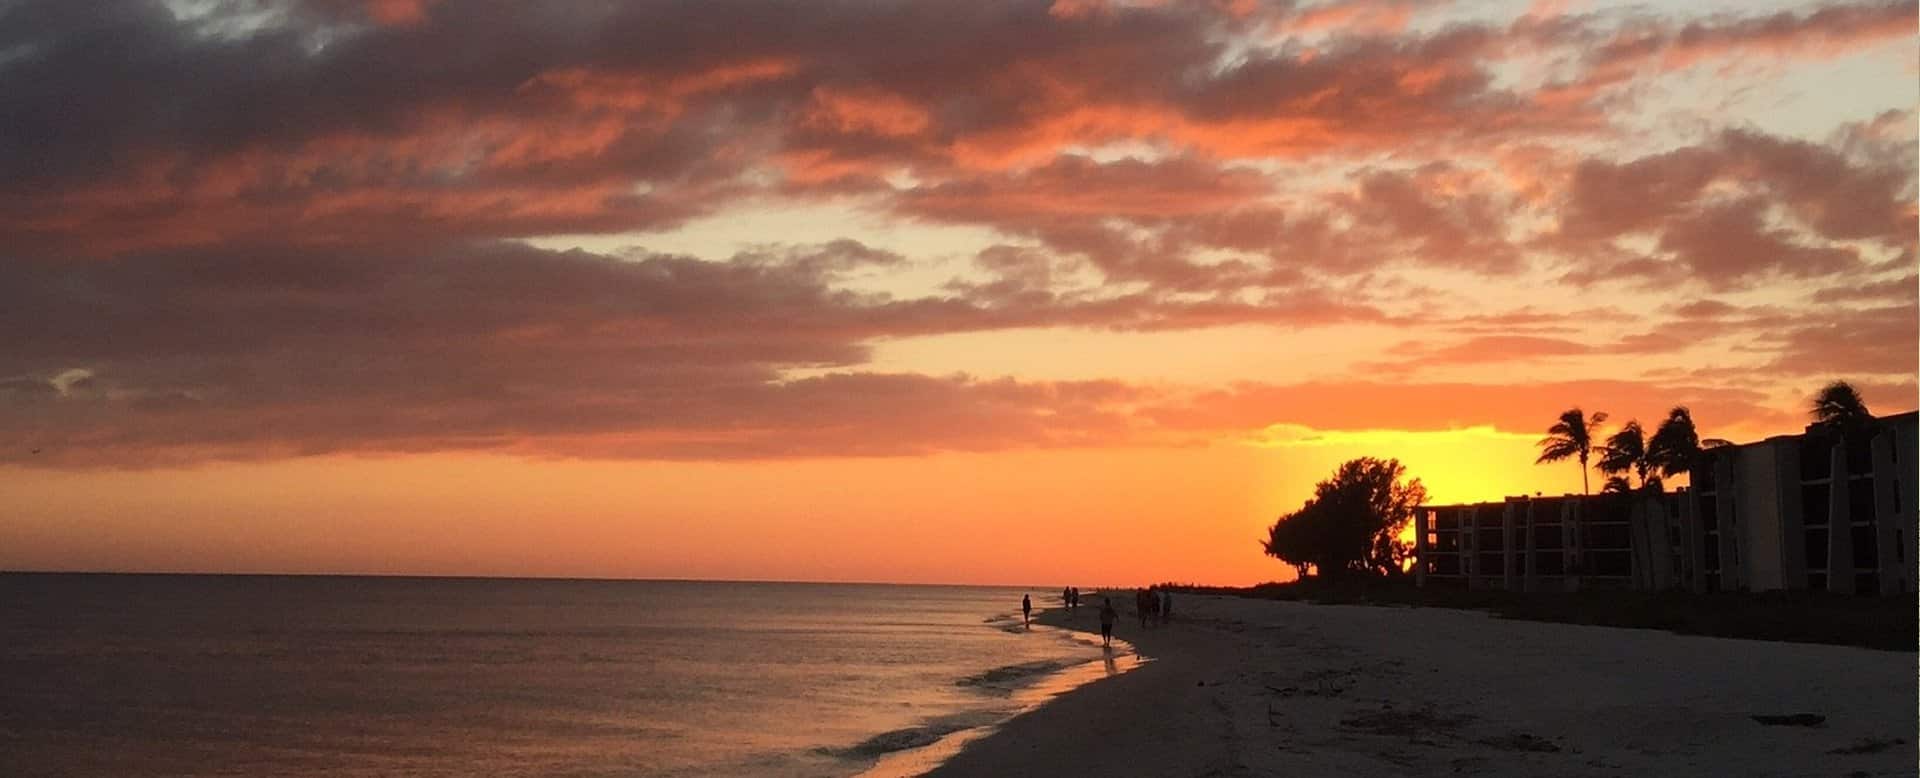 Resort Specials Deals Florida Vacation Packages Sanibel Island Sundial Beach Spa